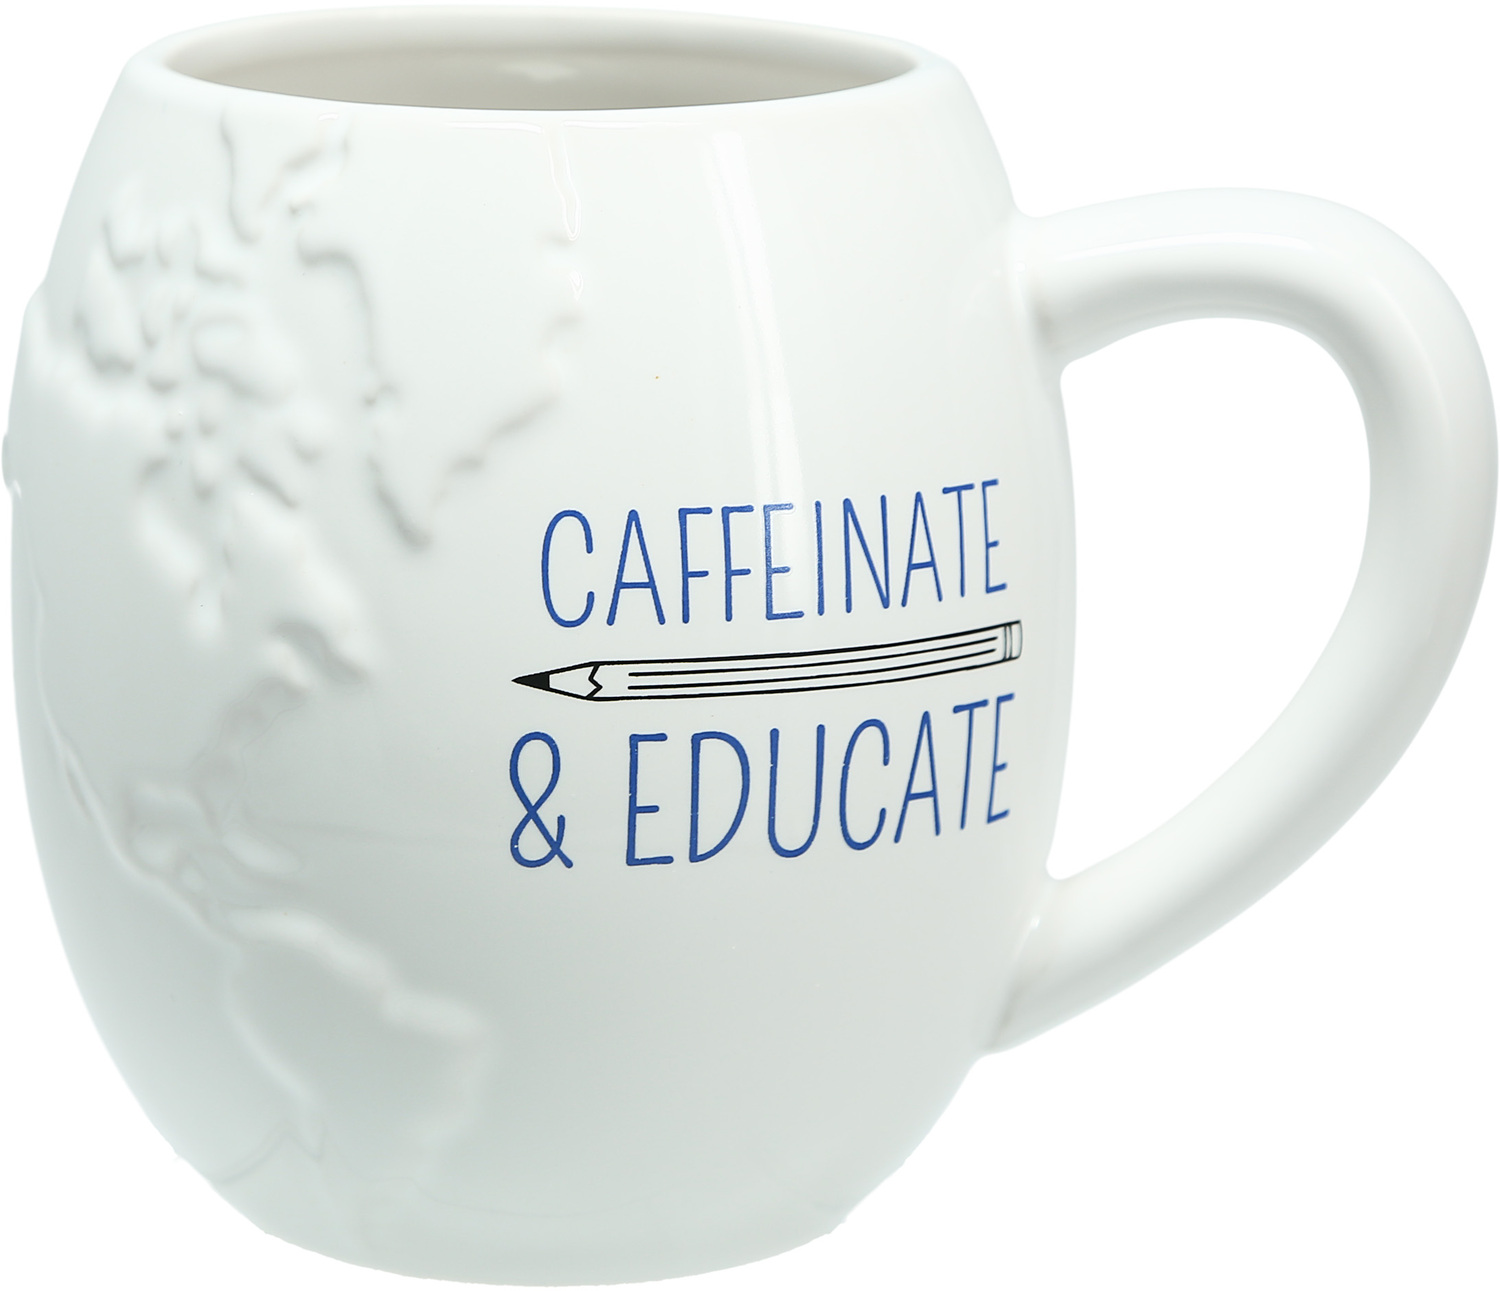 Caffeinate by Teachable Moments - Caffeinate - 22 oz Embossed Mug